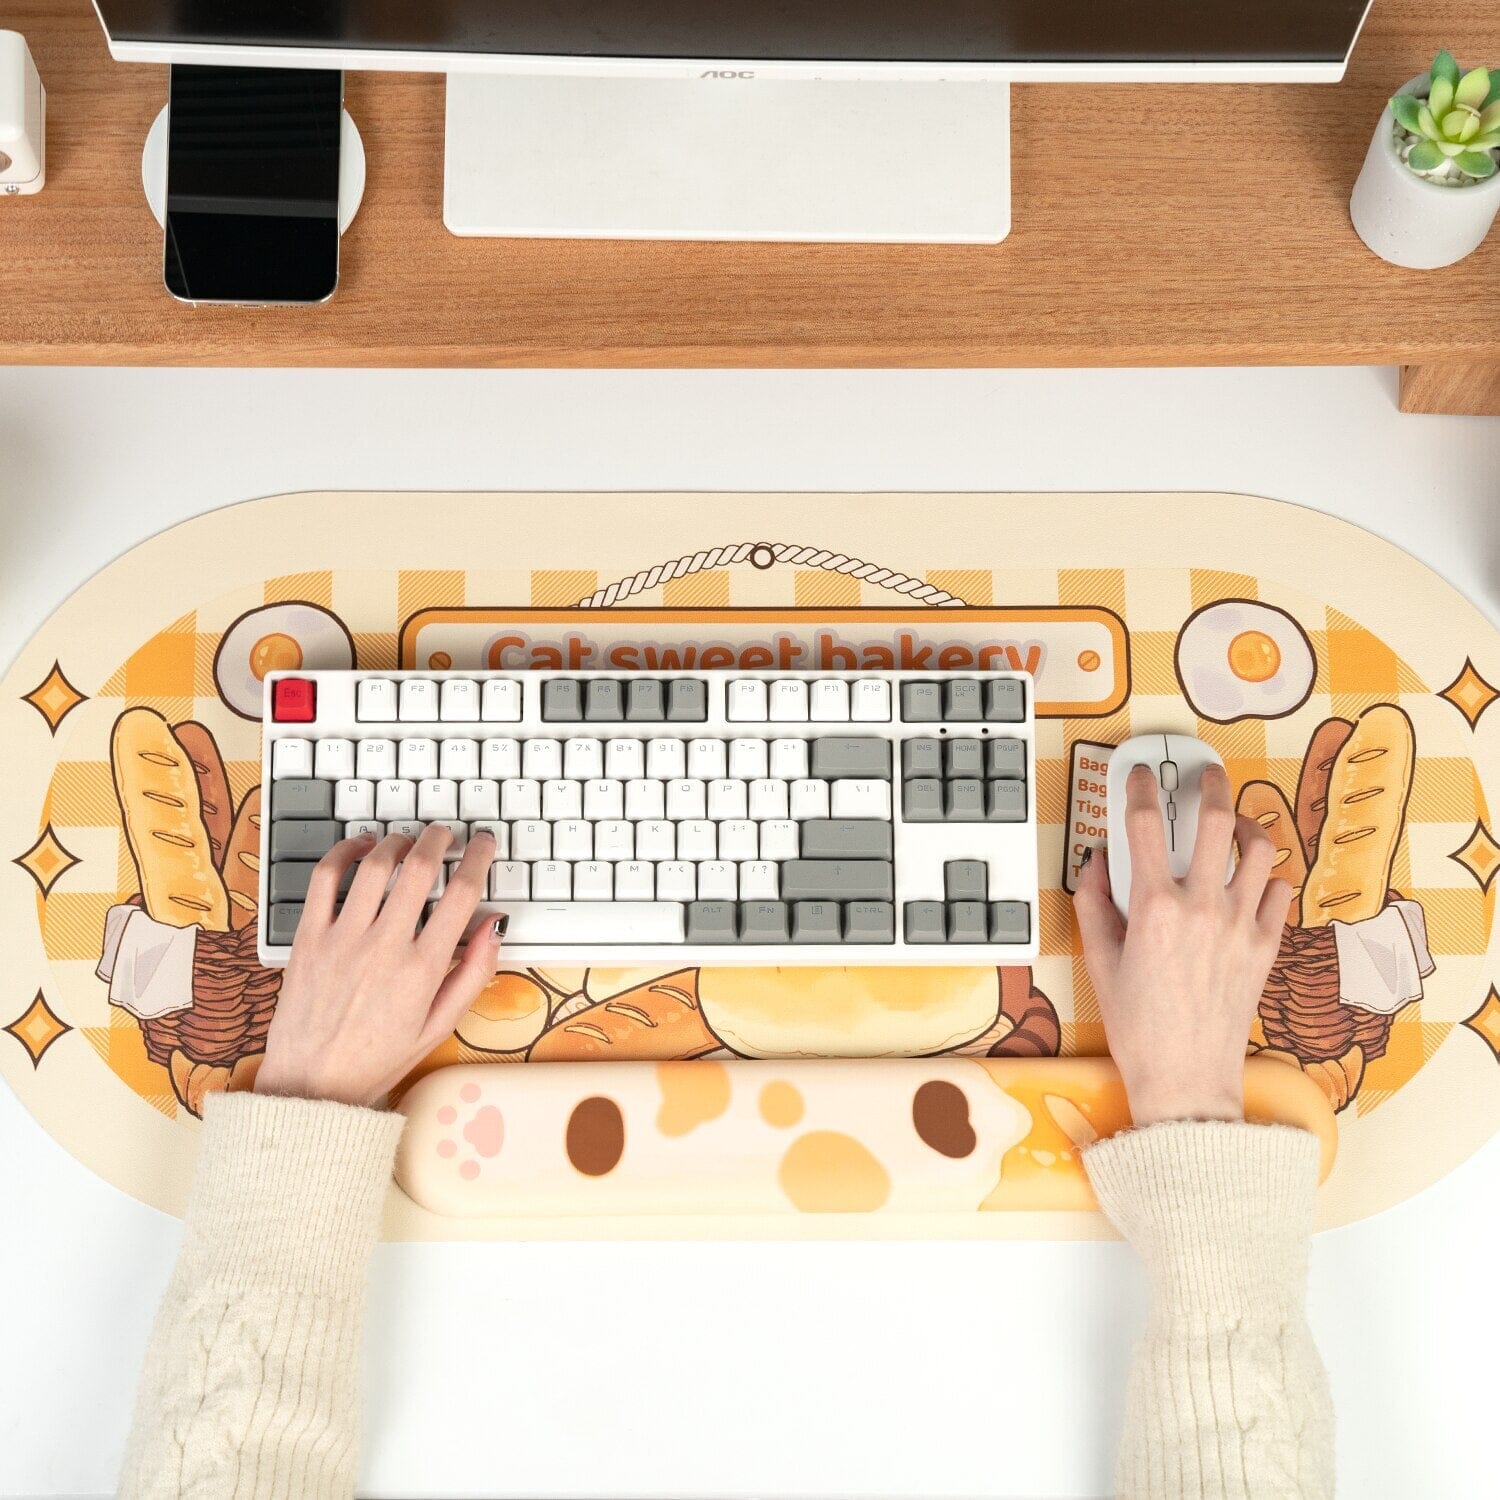 GeekShare Computer Mouse Pad Keyboard Wrist Rest Cat Bakery Super Cute Big Desk Mousepad Office Table Mat Gaming Accessories New 0 GatoGeek 